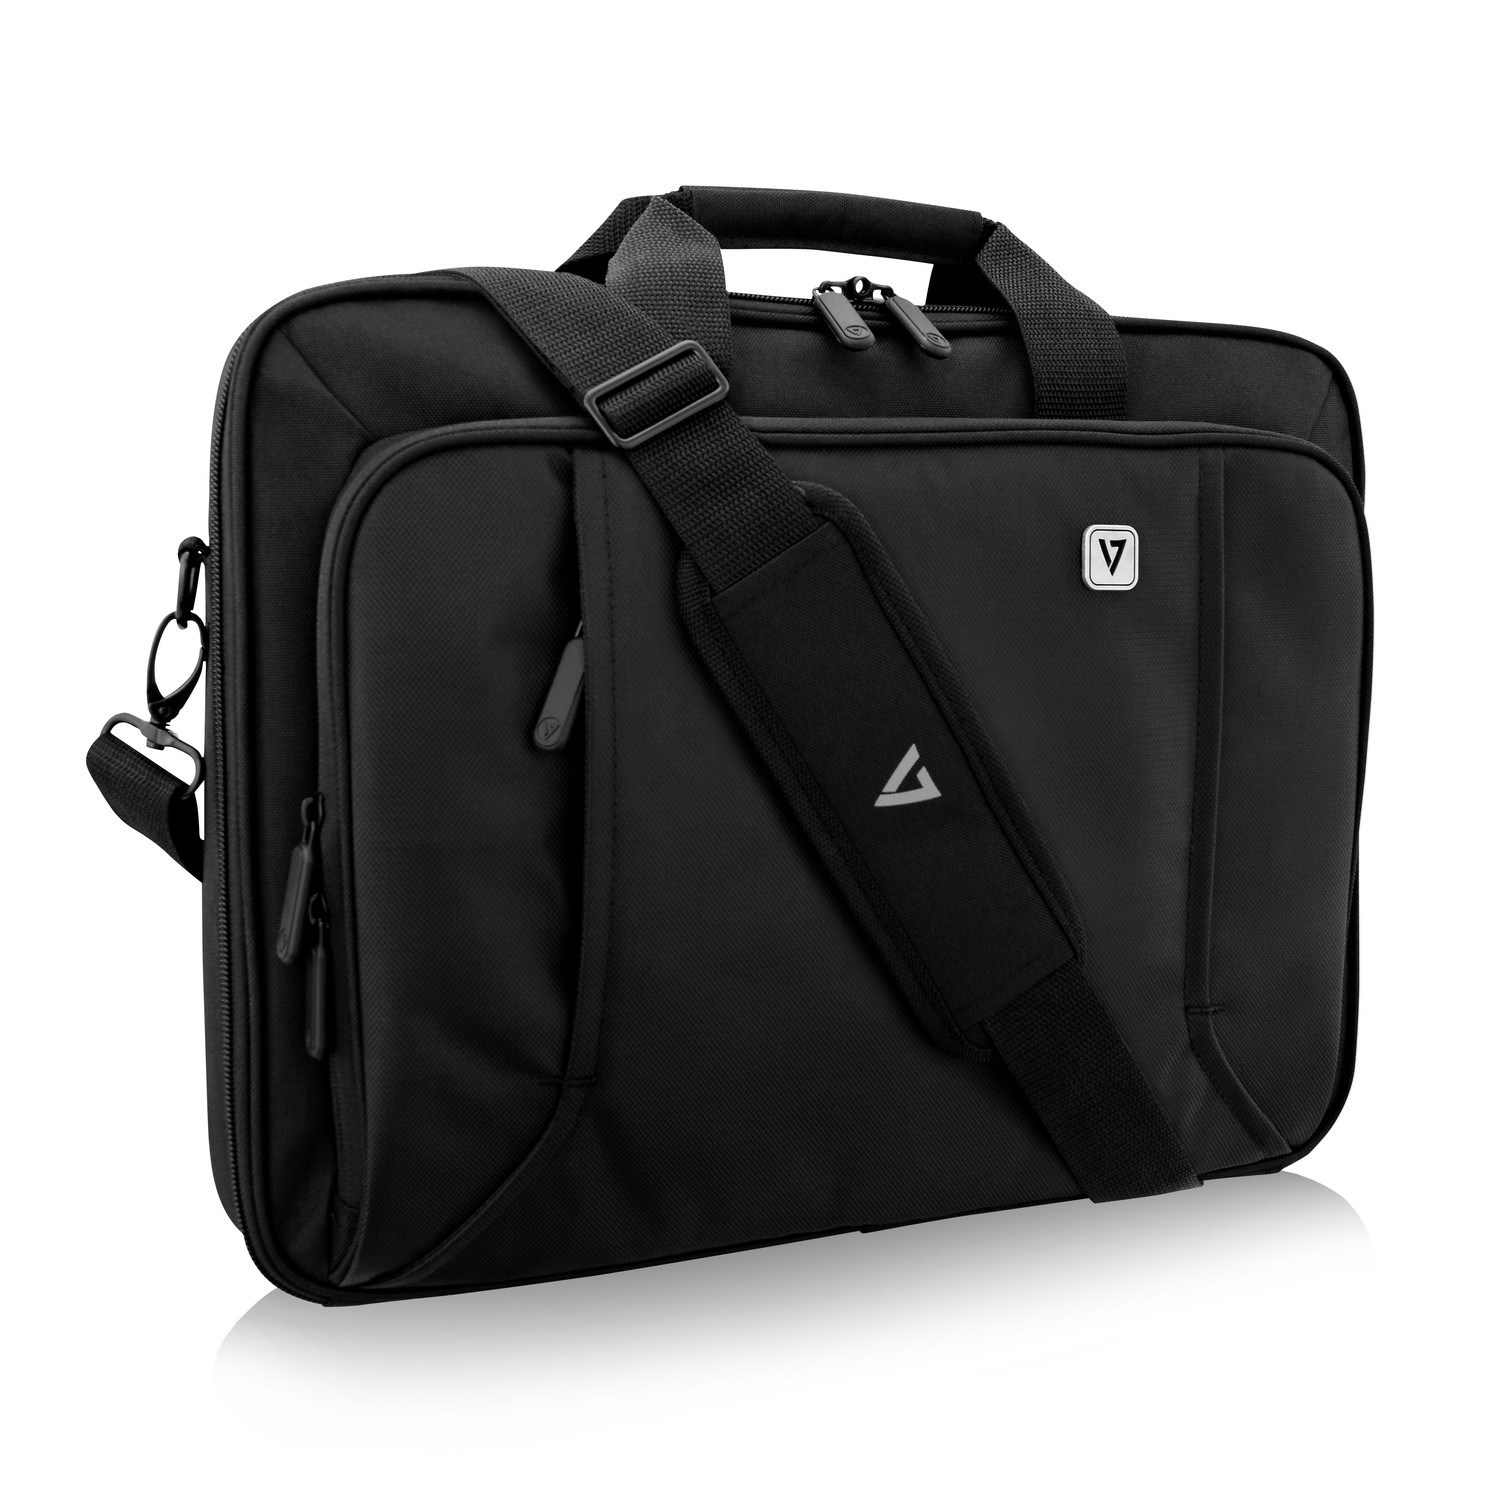 Photos - Business Briefcase V7 17 inch Professional FrontLoading Laptop Case CCP17-BLK-9E 